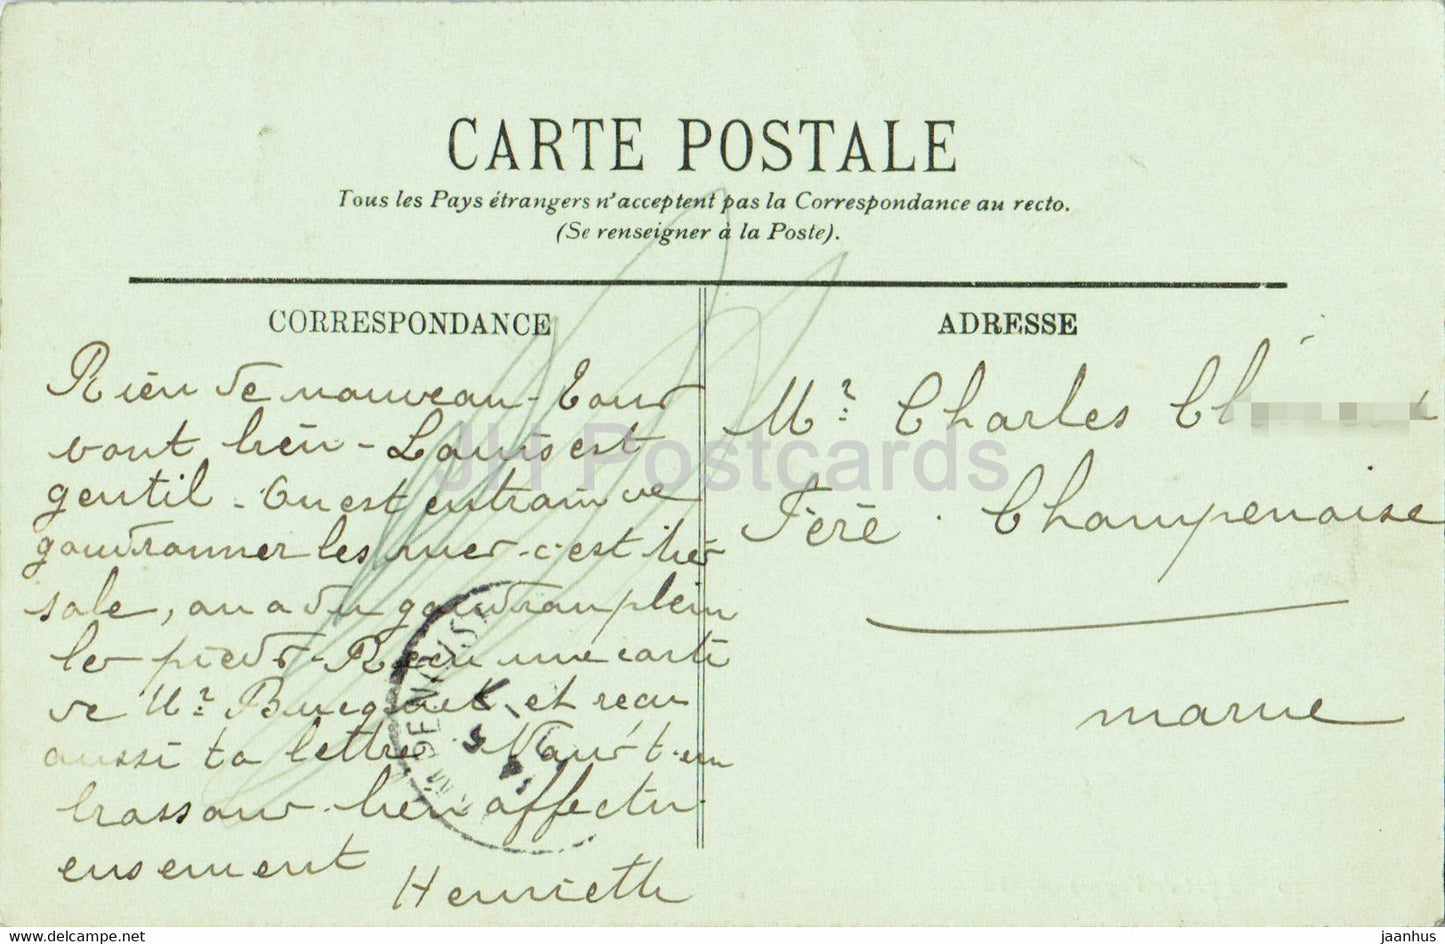 Effet de Vagues - 29 - LL - old postcard - 1909 - France - used